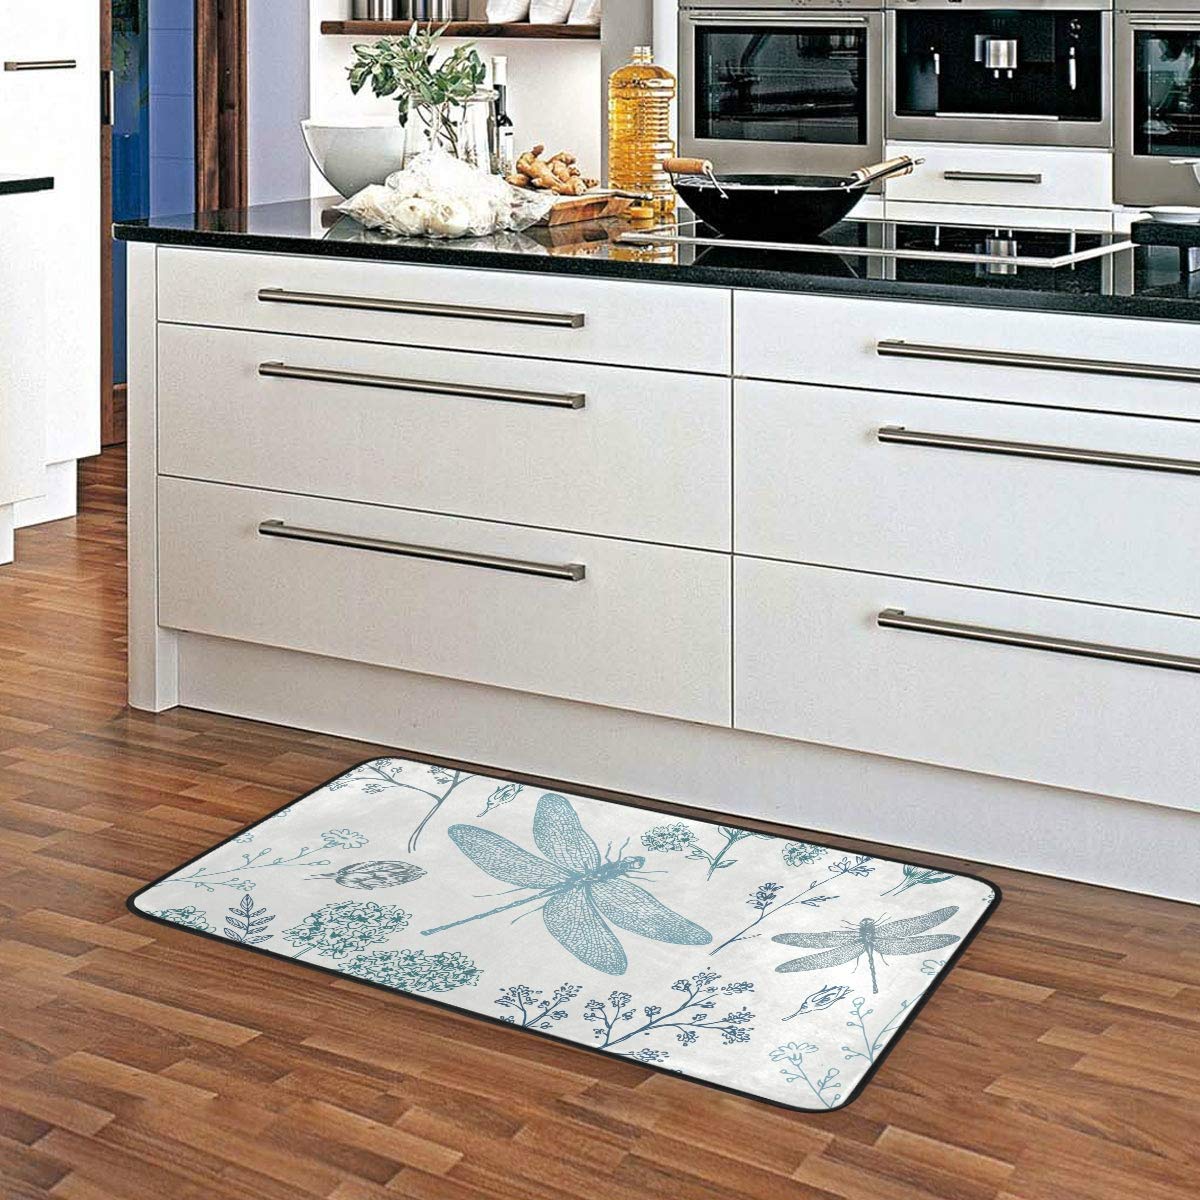 Kitchen Rugs Blue Dragonfly Design Non-Slip Soft Kitchen Mats Bath Rug Runner Doormats Carpet for Home Decor, 39" X 20"